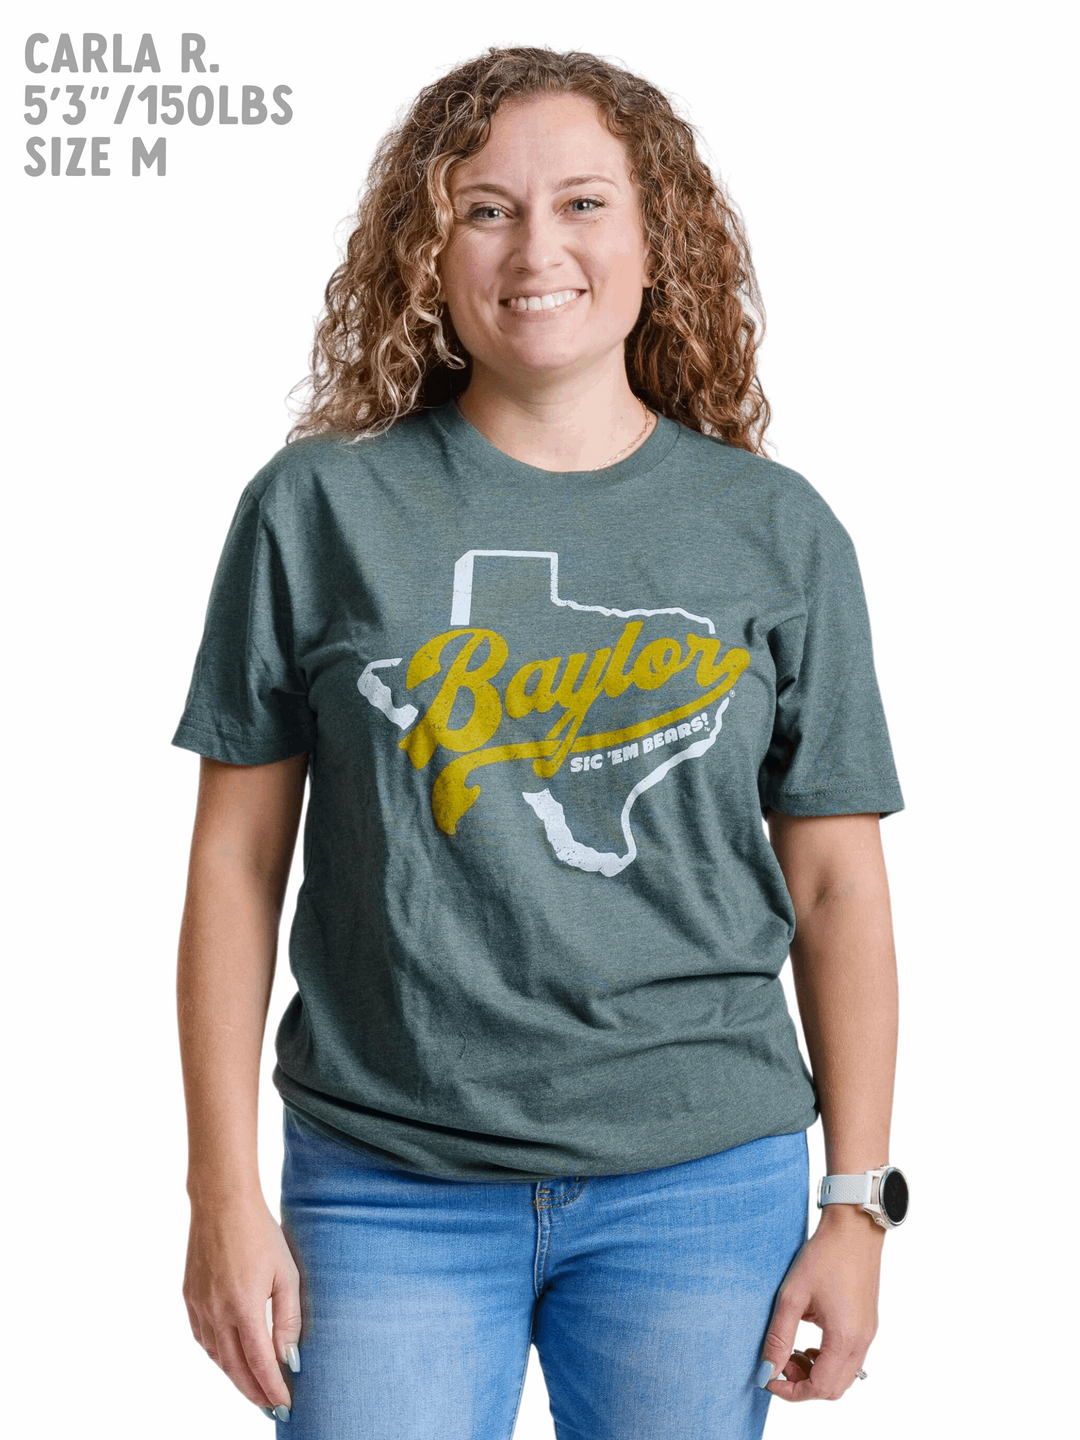 Baylor University State of Texas Sic 'Em Bears Forest Green T-Shirt on model